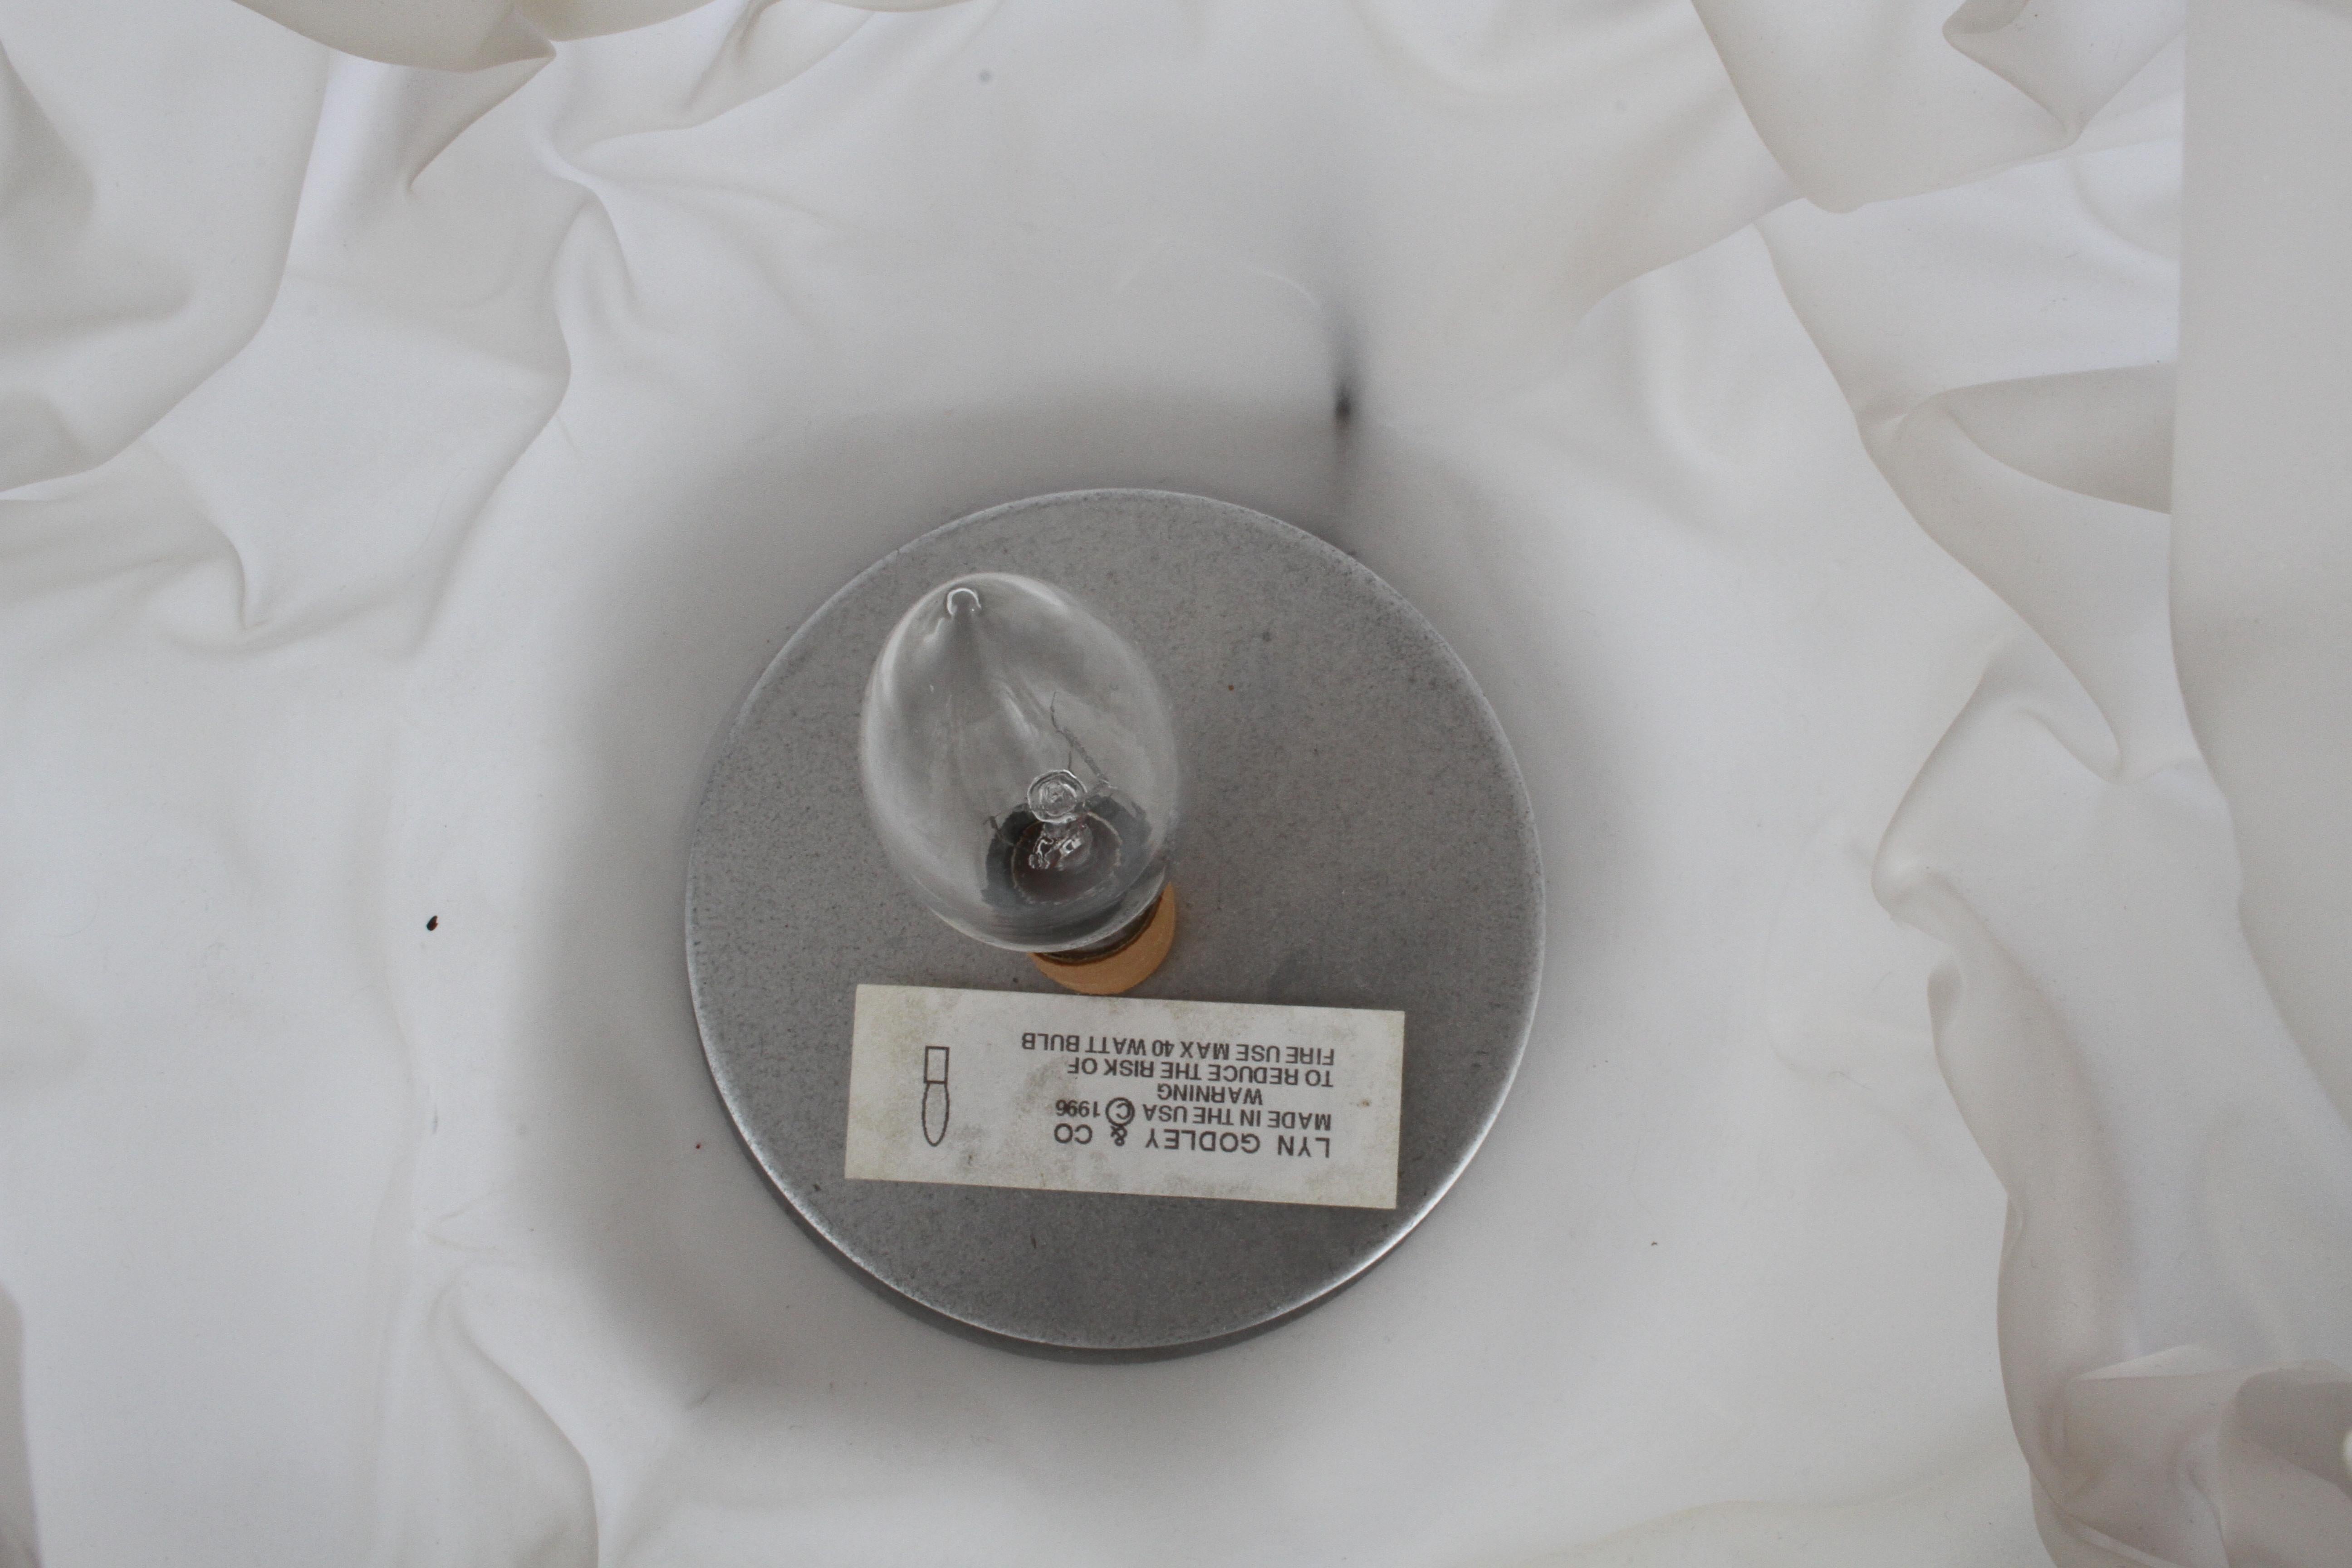 Steel Lyn Godley & Lloyd Schwan, Hand Formed Clear PVC Crinkle Lamp, MOMA Collection